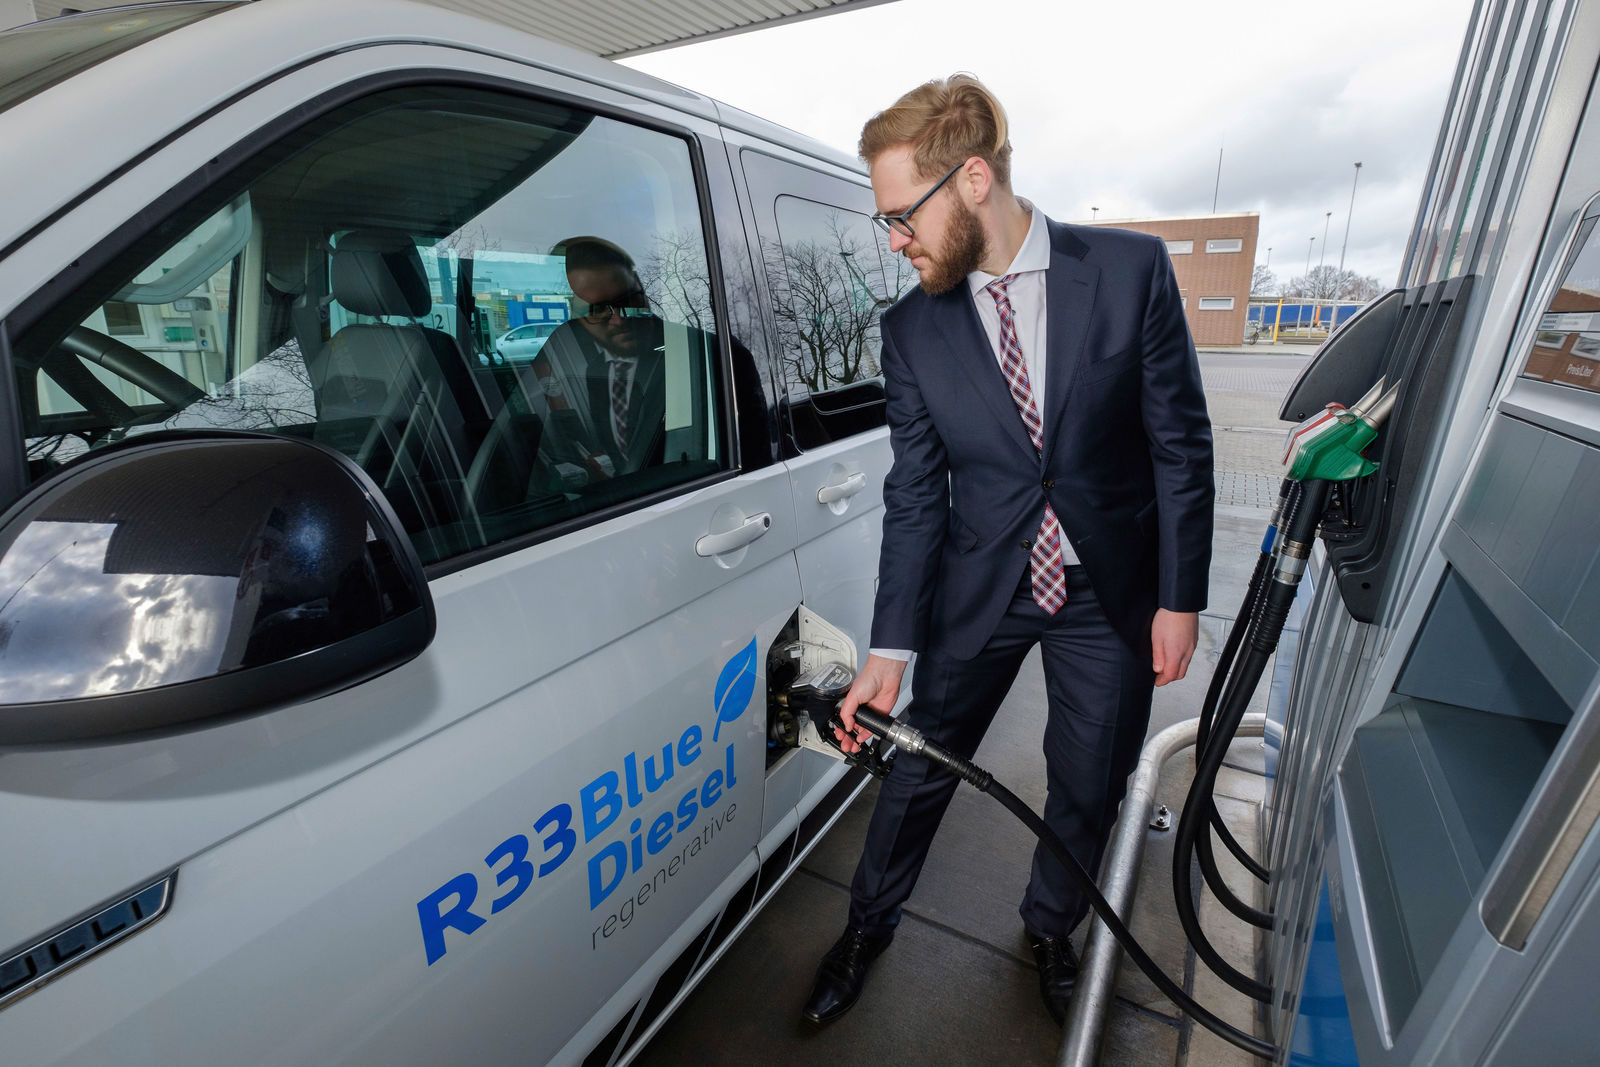 New regenerative R33 BlueDiesel fuel helps reduce CO2 emissions of fleets